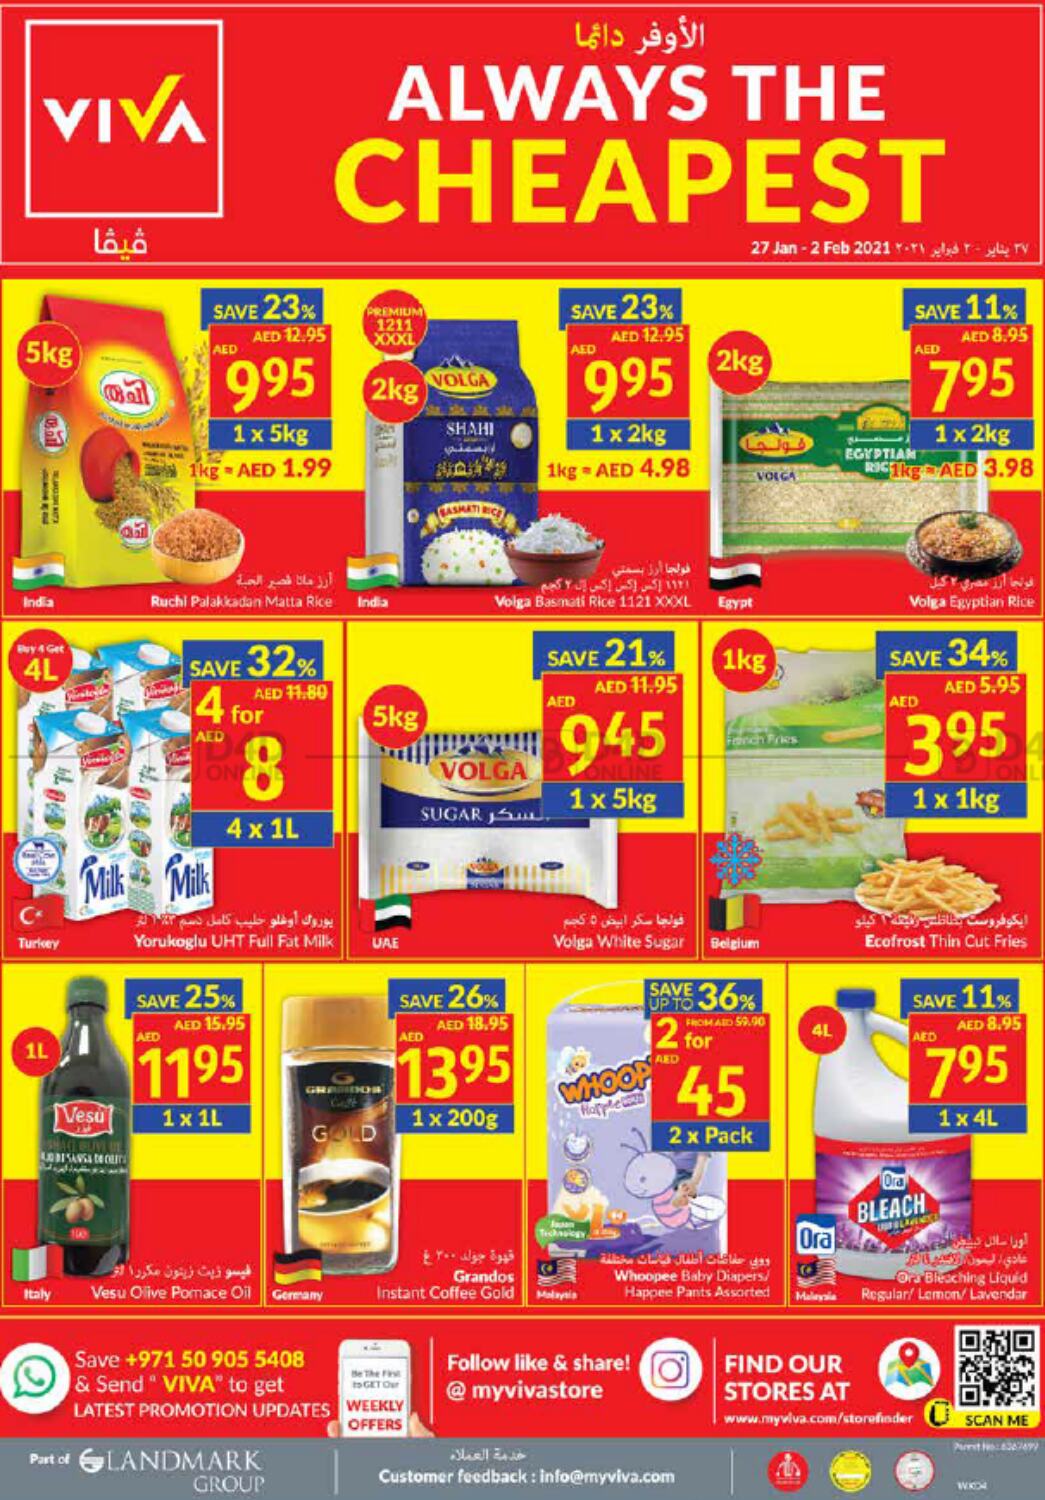 Viva Supermarket Always The Cheapest in UAE Offers  United Arab